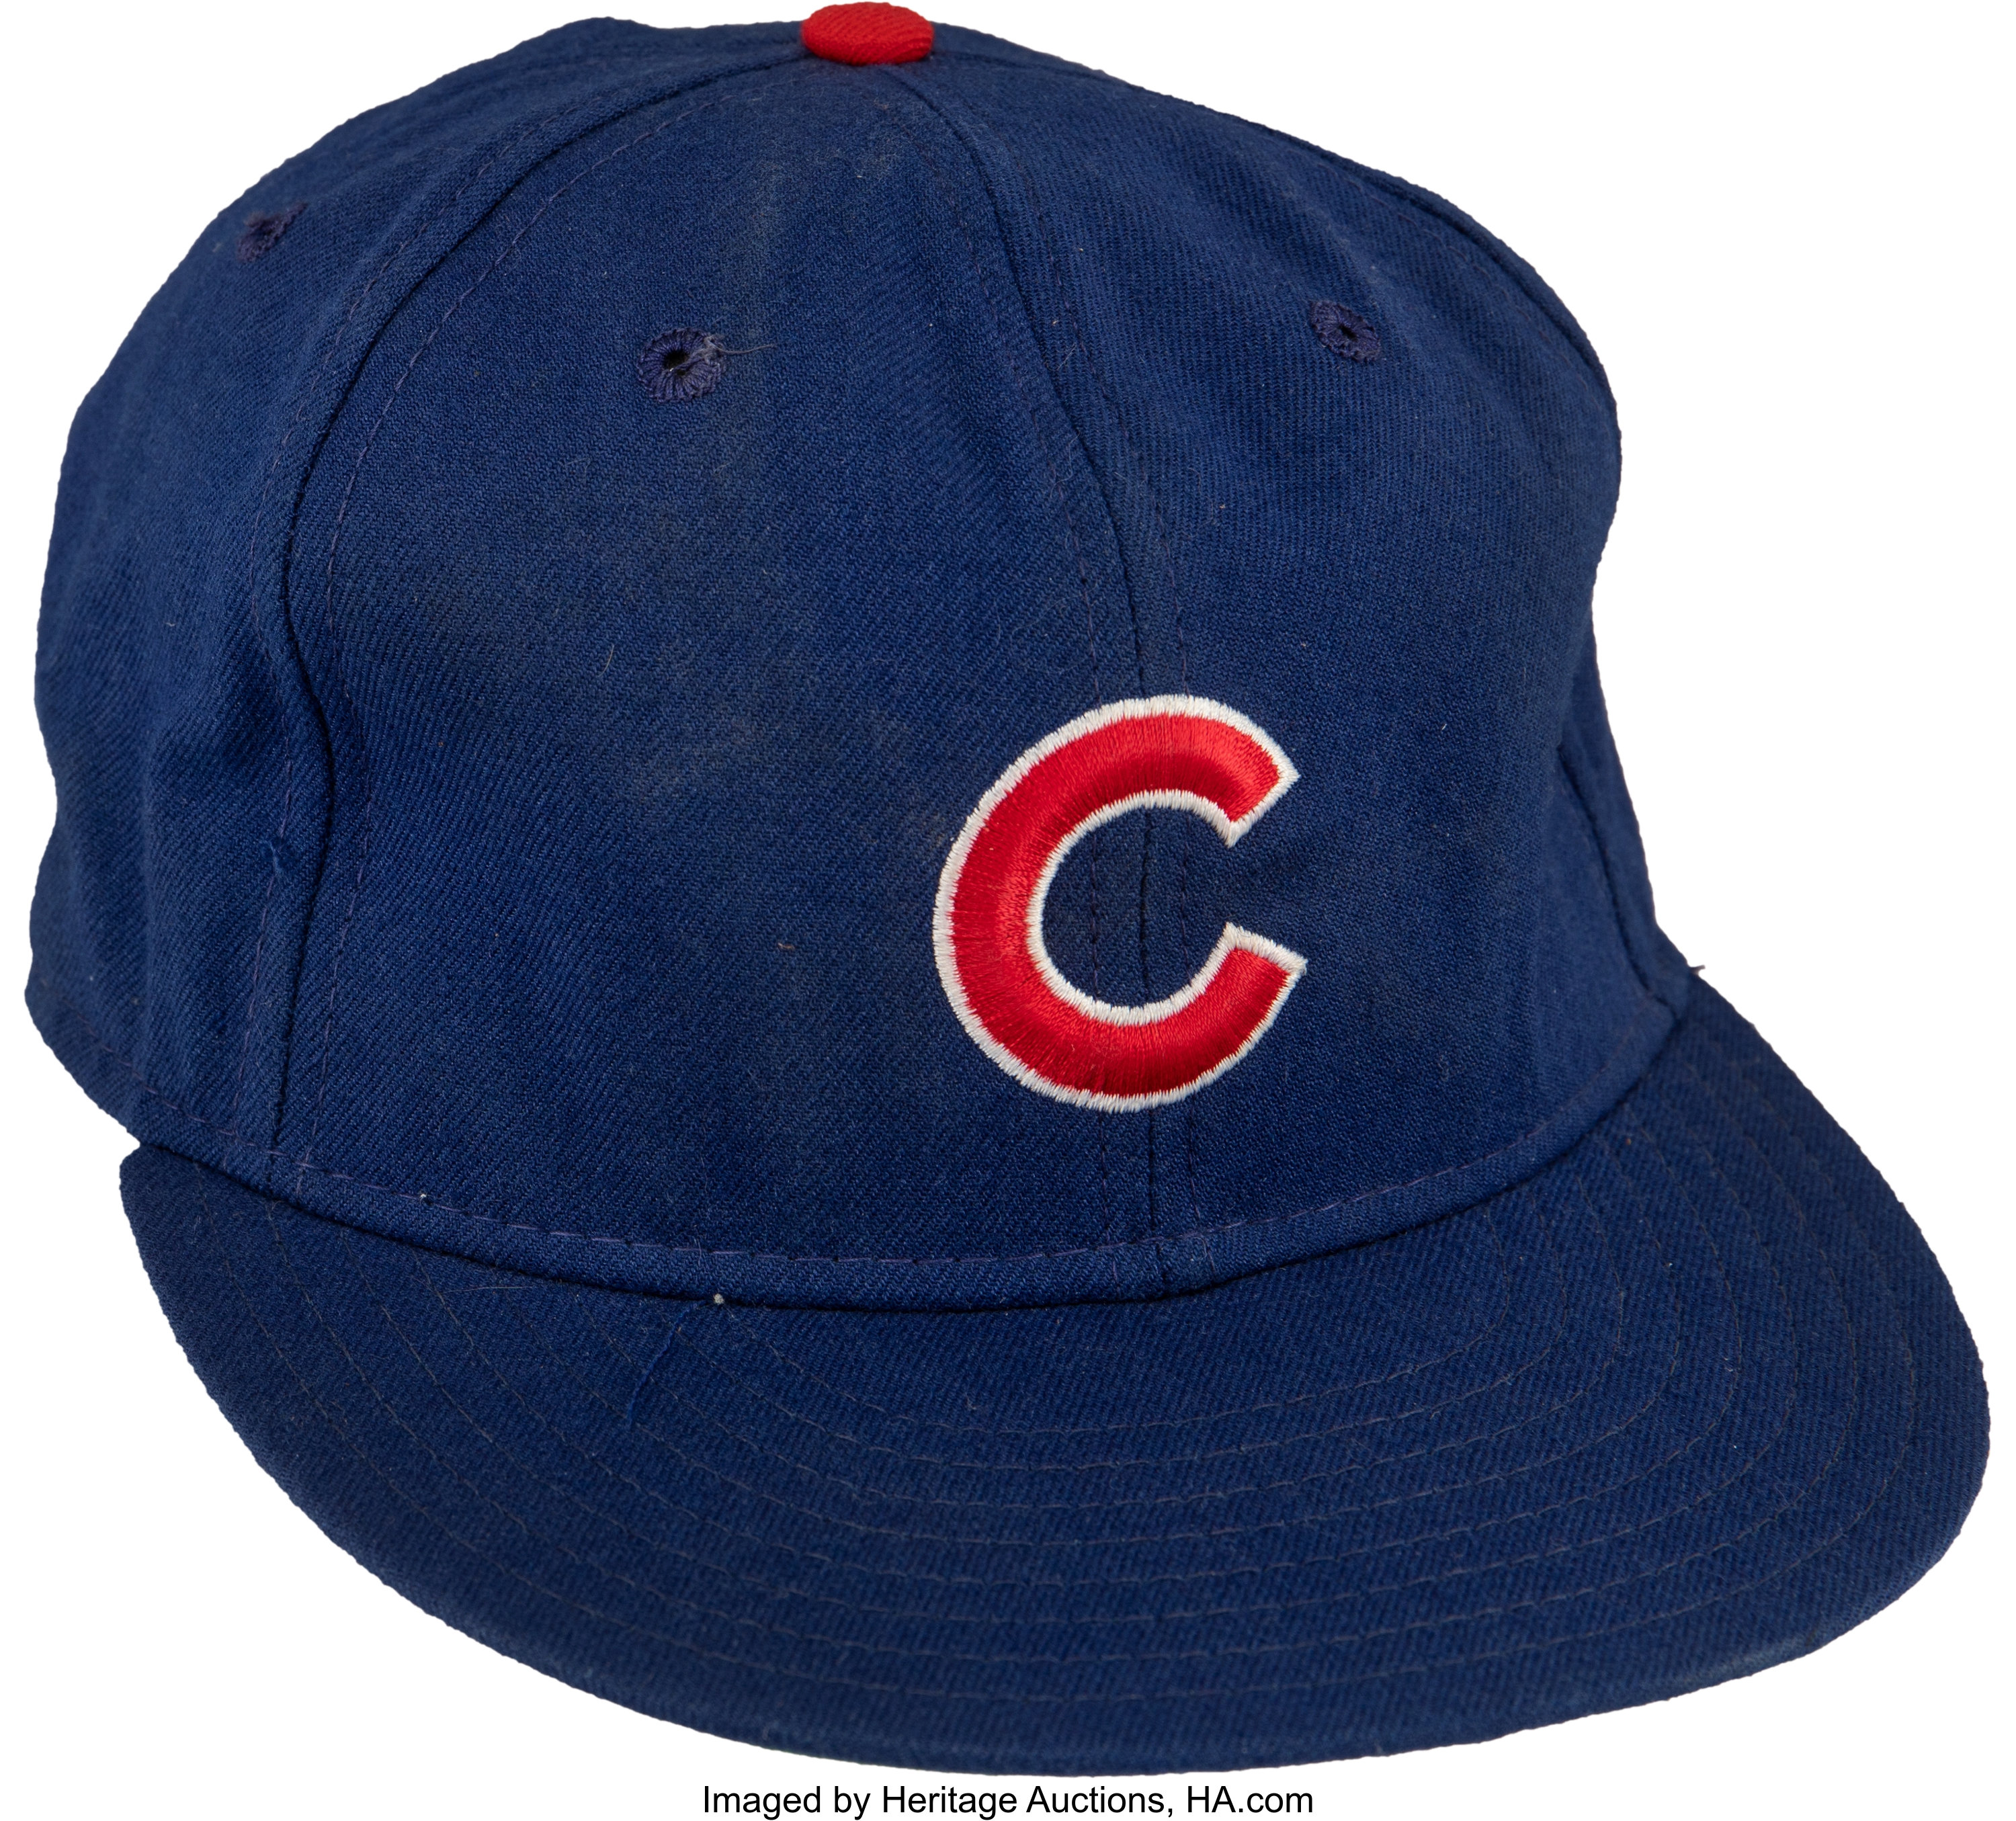 Wyco Vintage 1992 Ryne Sandberg Chicago Cubs Shirt